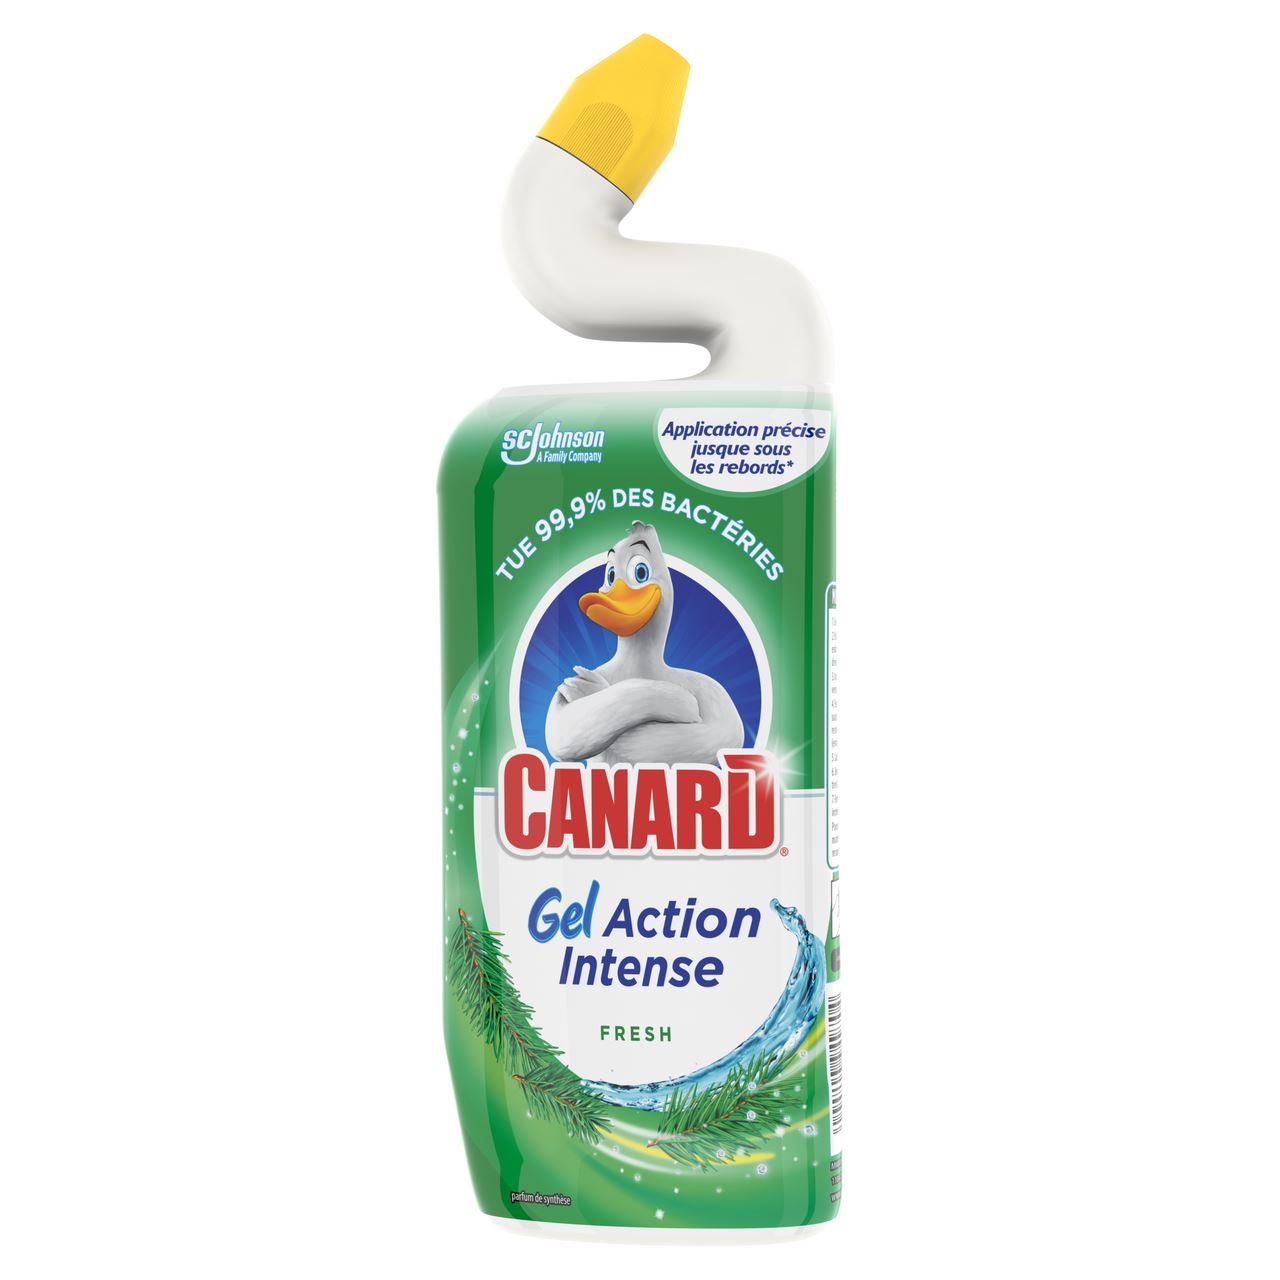 Gel WC action intense fresh Canard